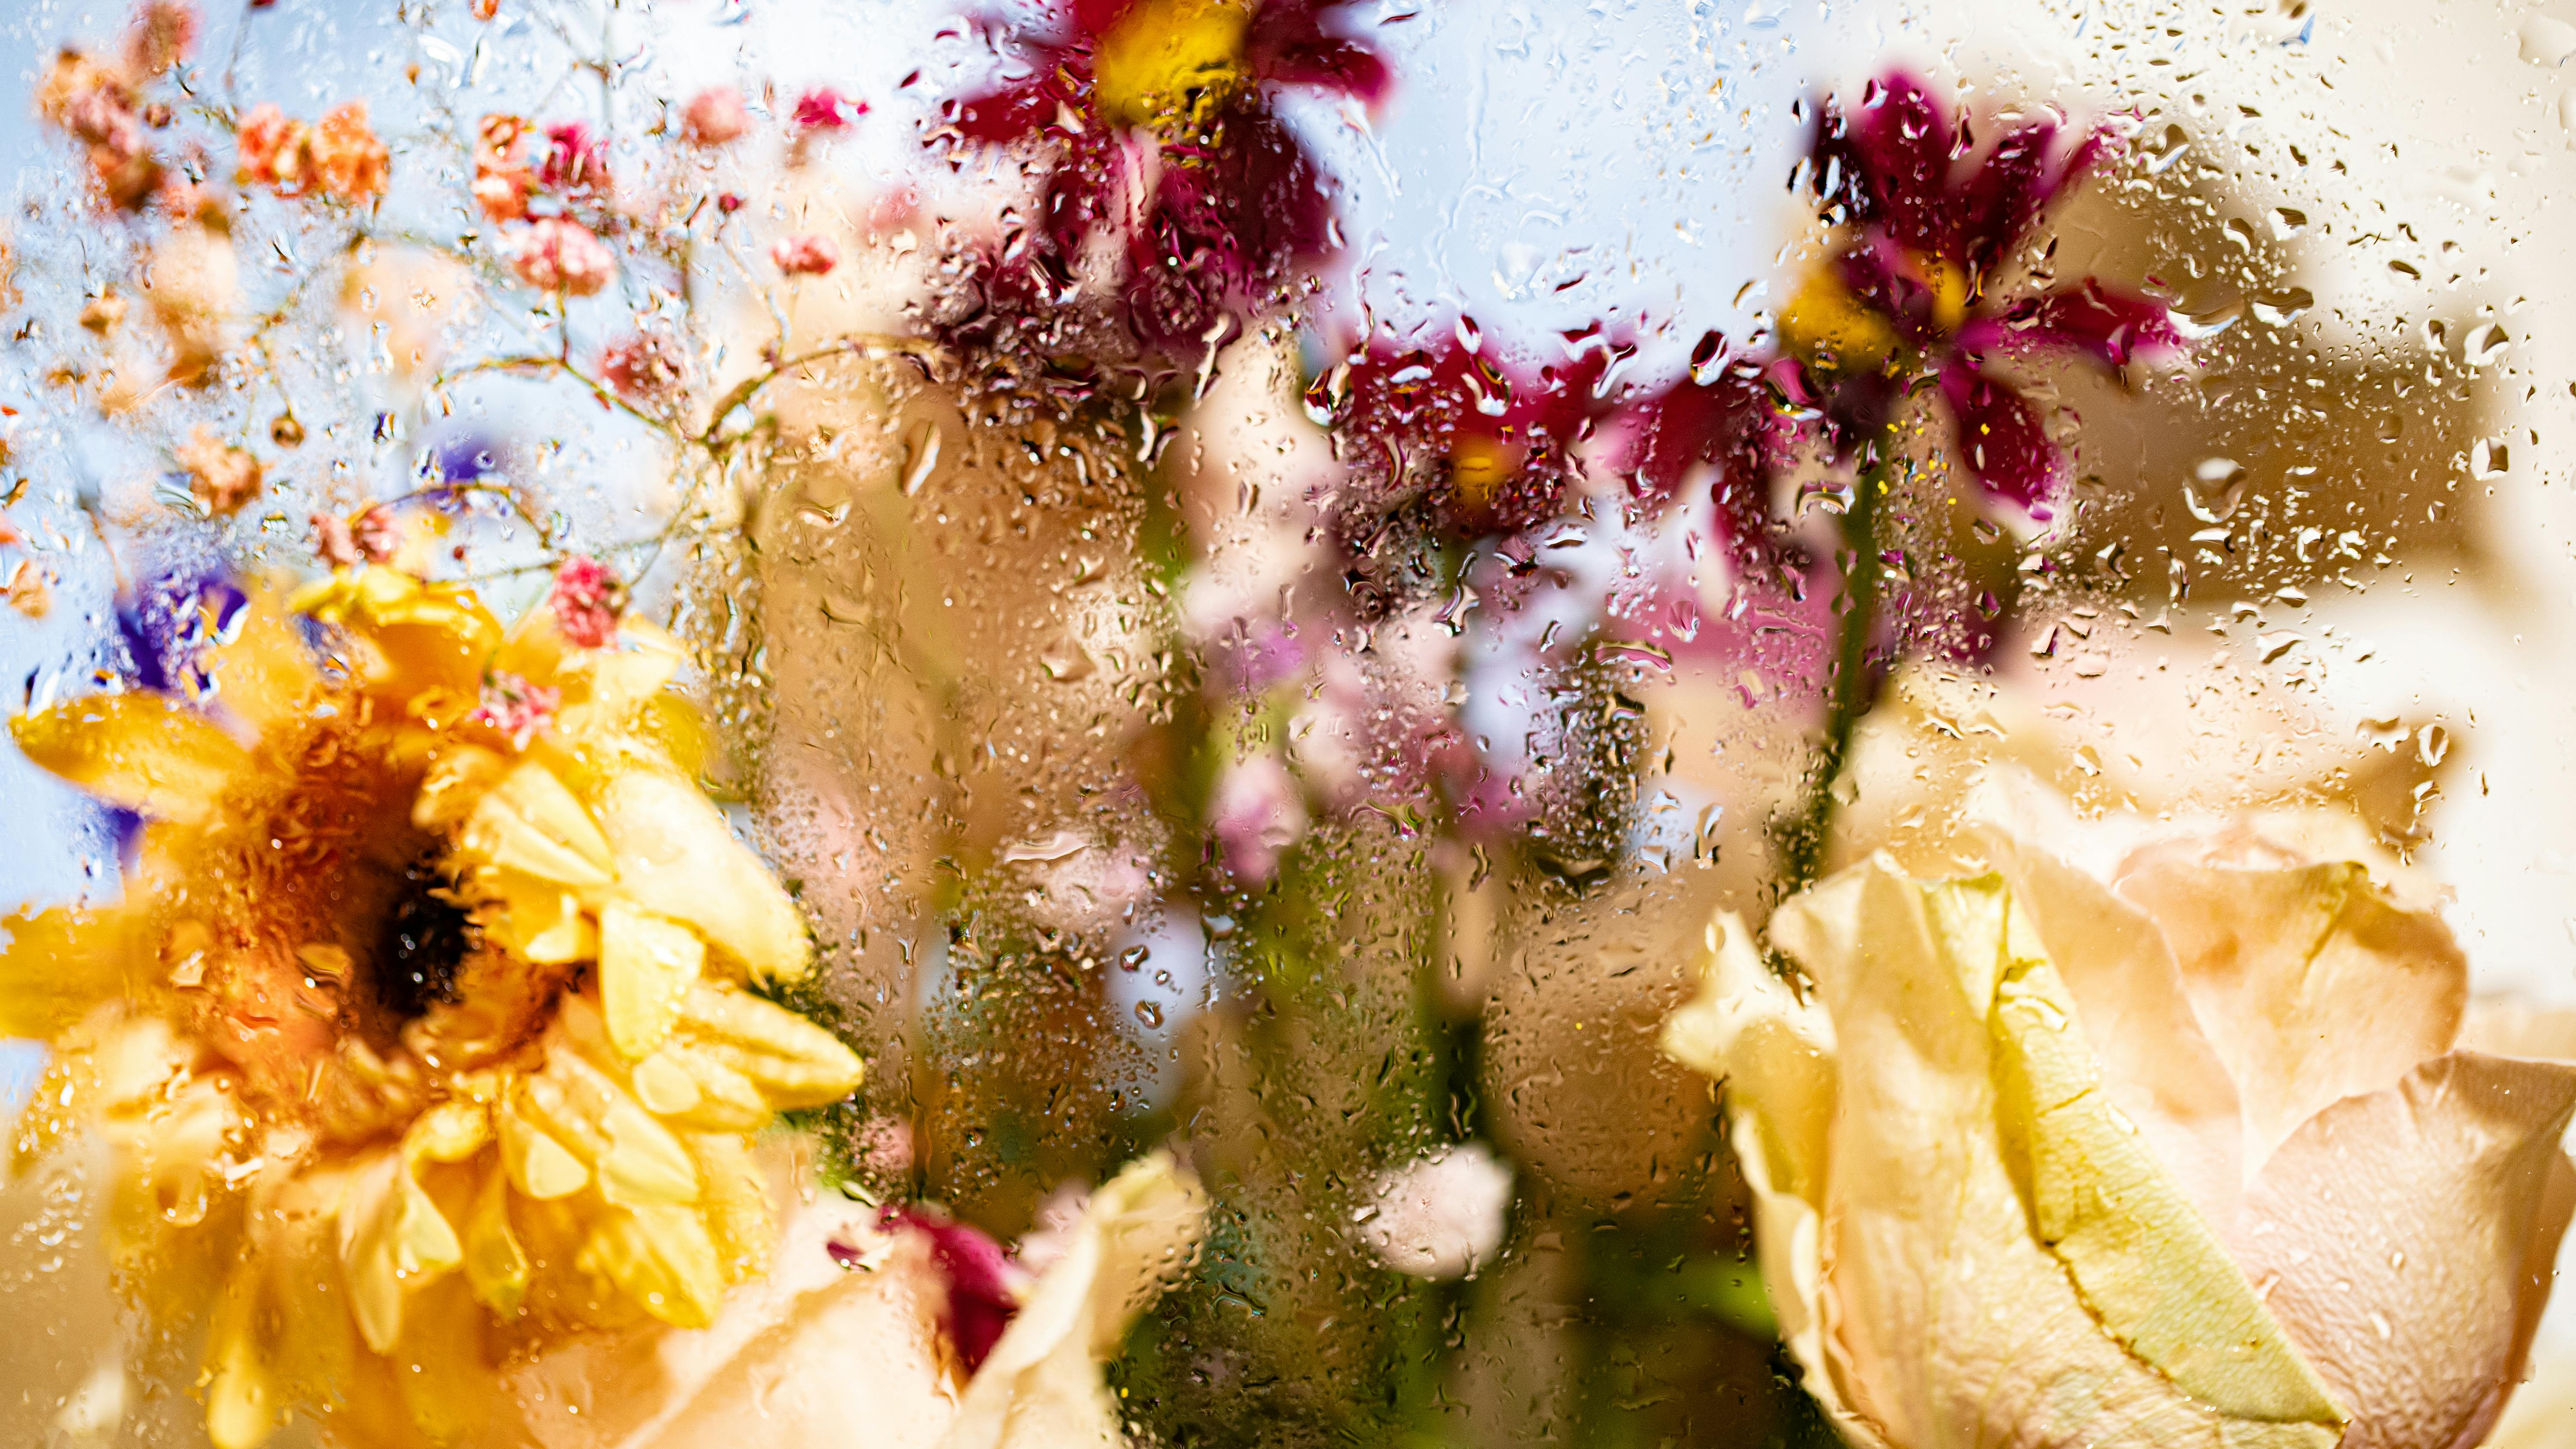 Wet Flower Pictures  Download Free Images on Unsplash